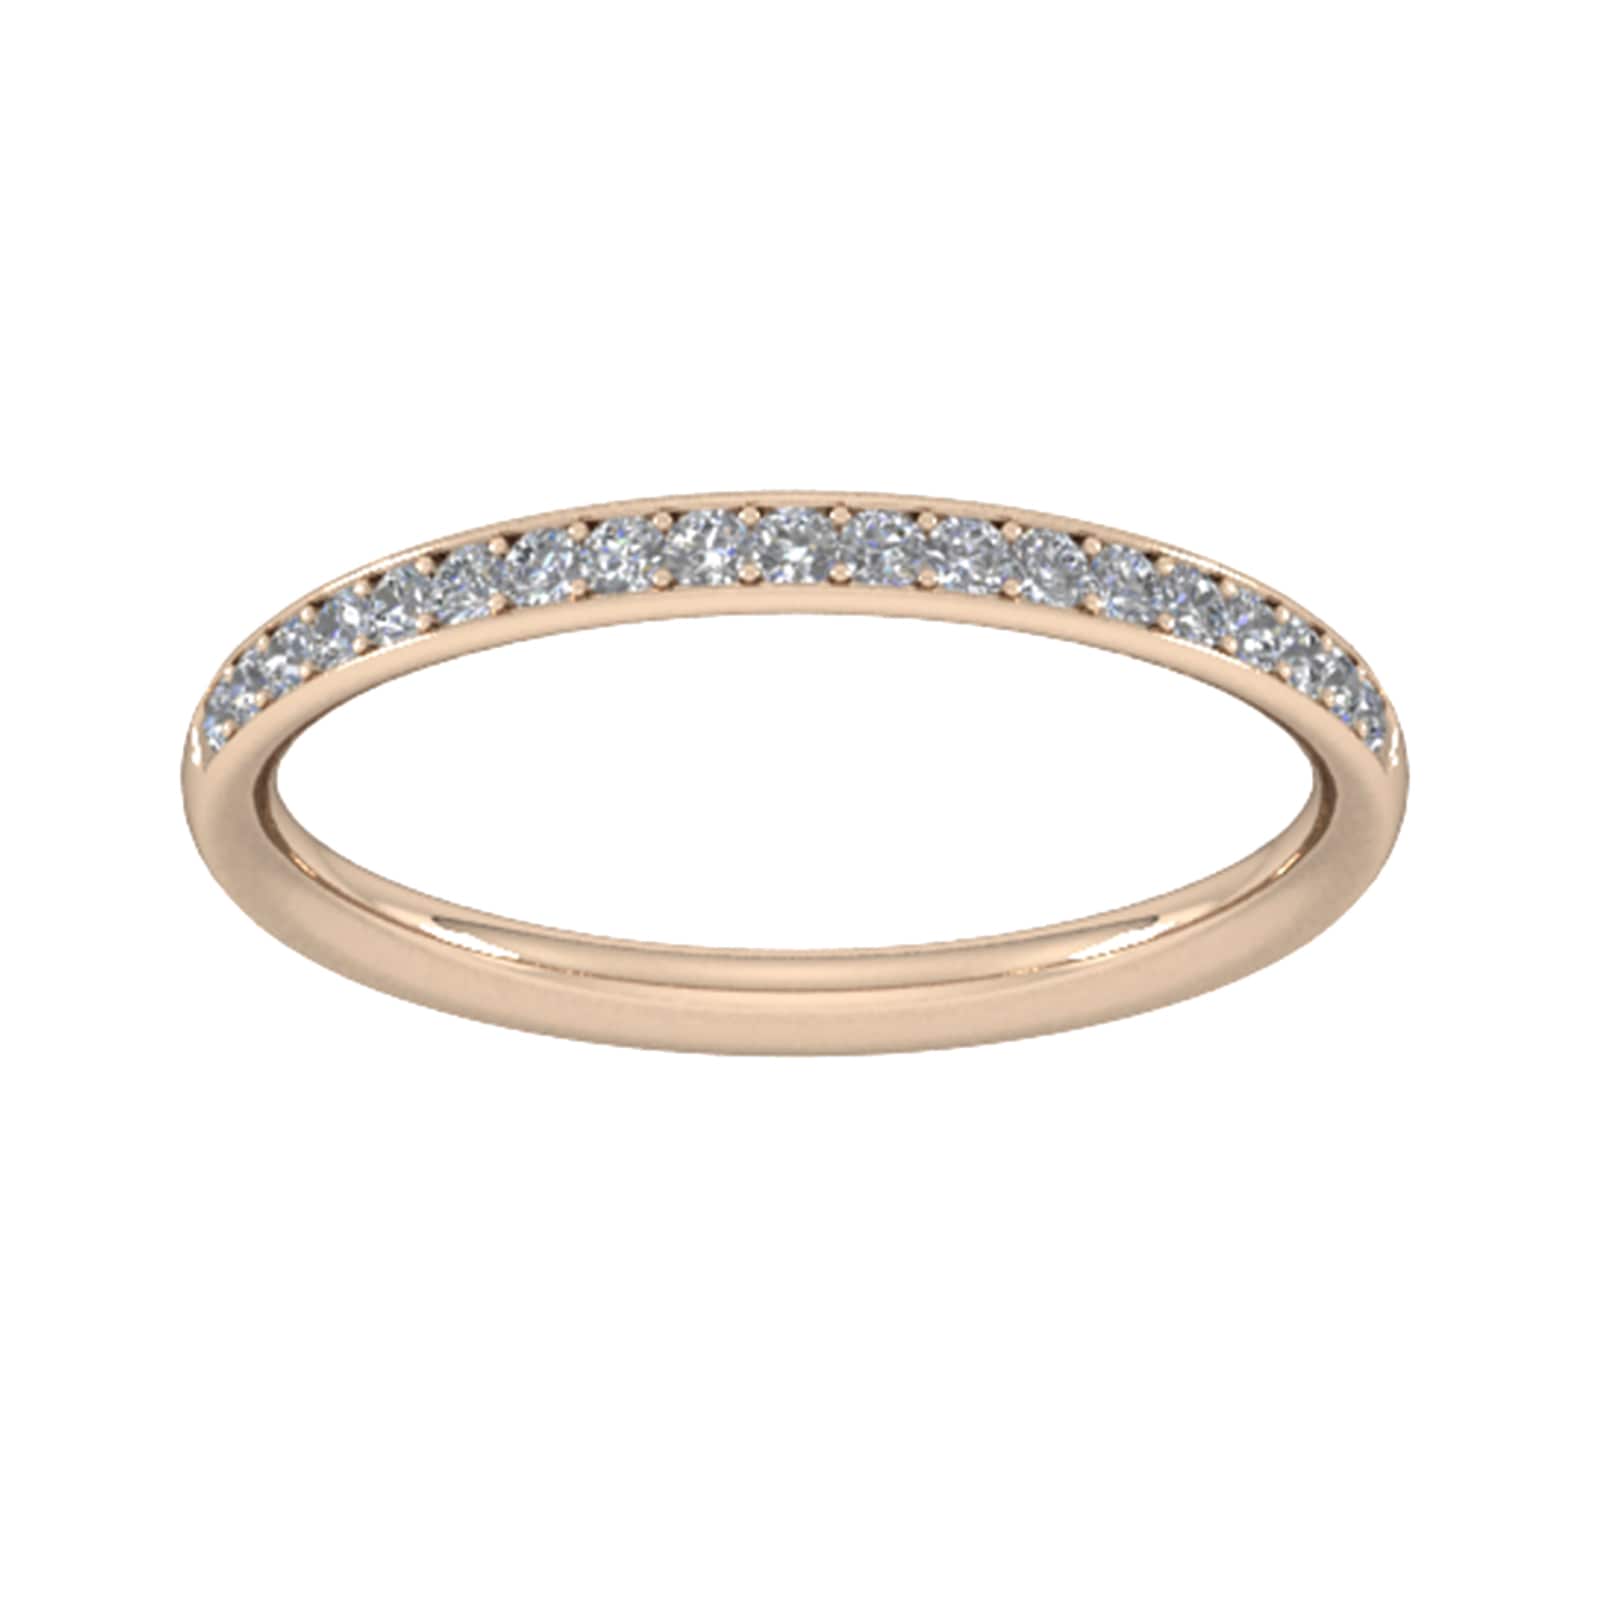 0.18 Carat Total Weight Brilliant Cut Grain Set Diamond Wedding Ring In 9 Carat Rose Gold - Ring Size J